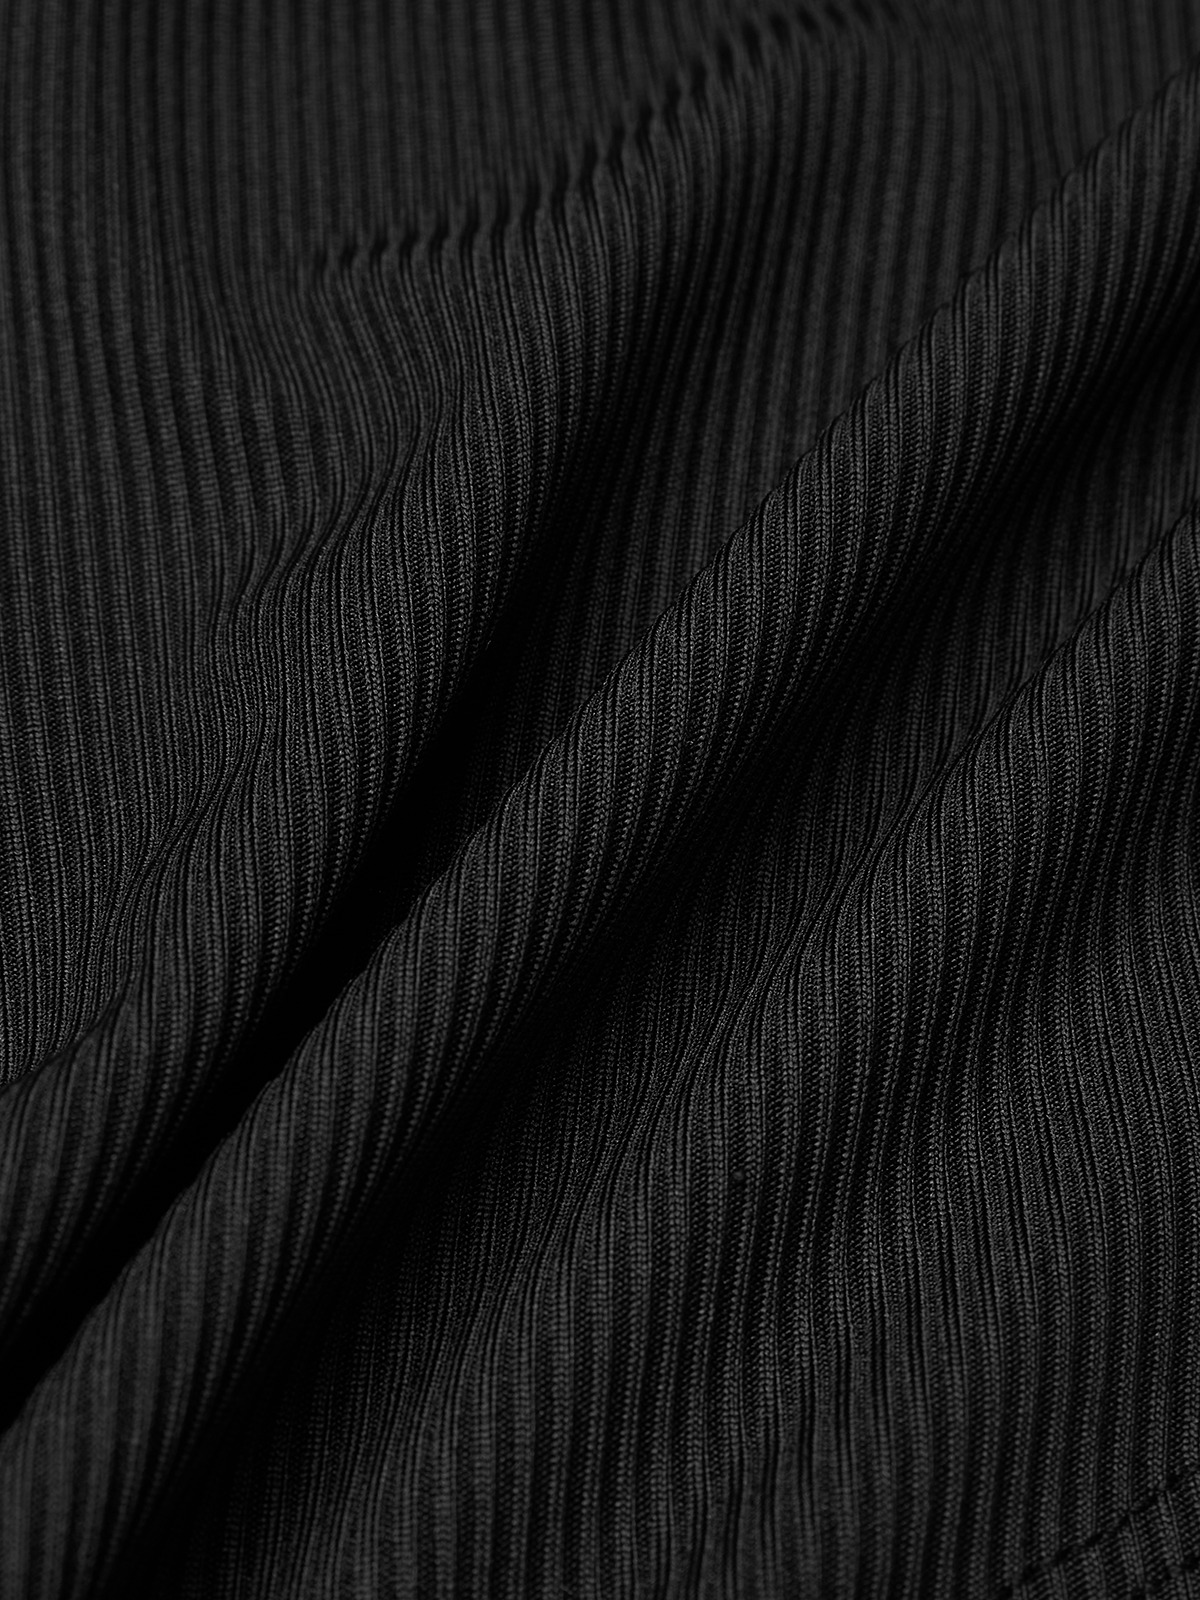 Jersey Cut Out Strapless Plain Sleeveless Jumpsuit